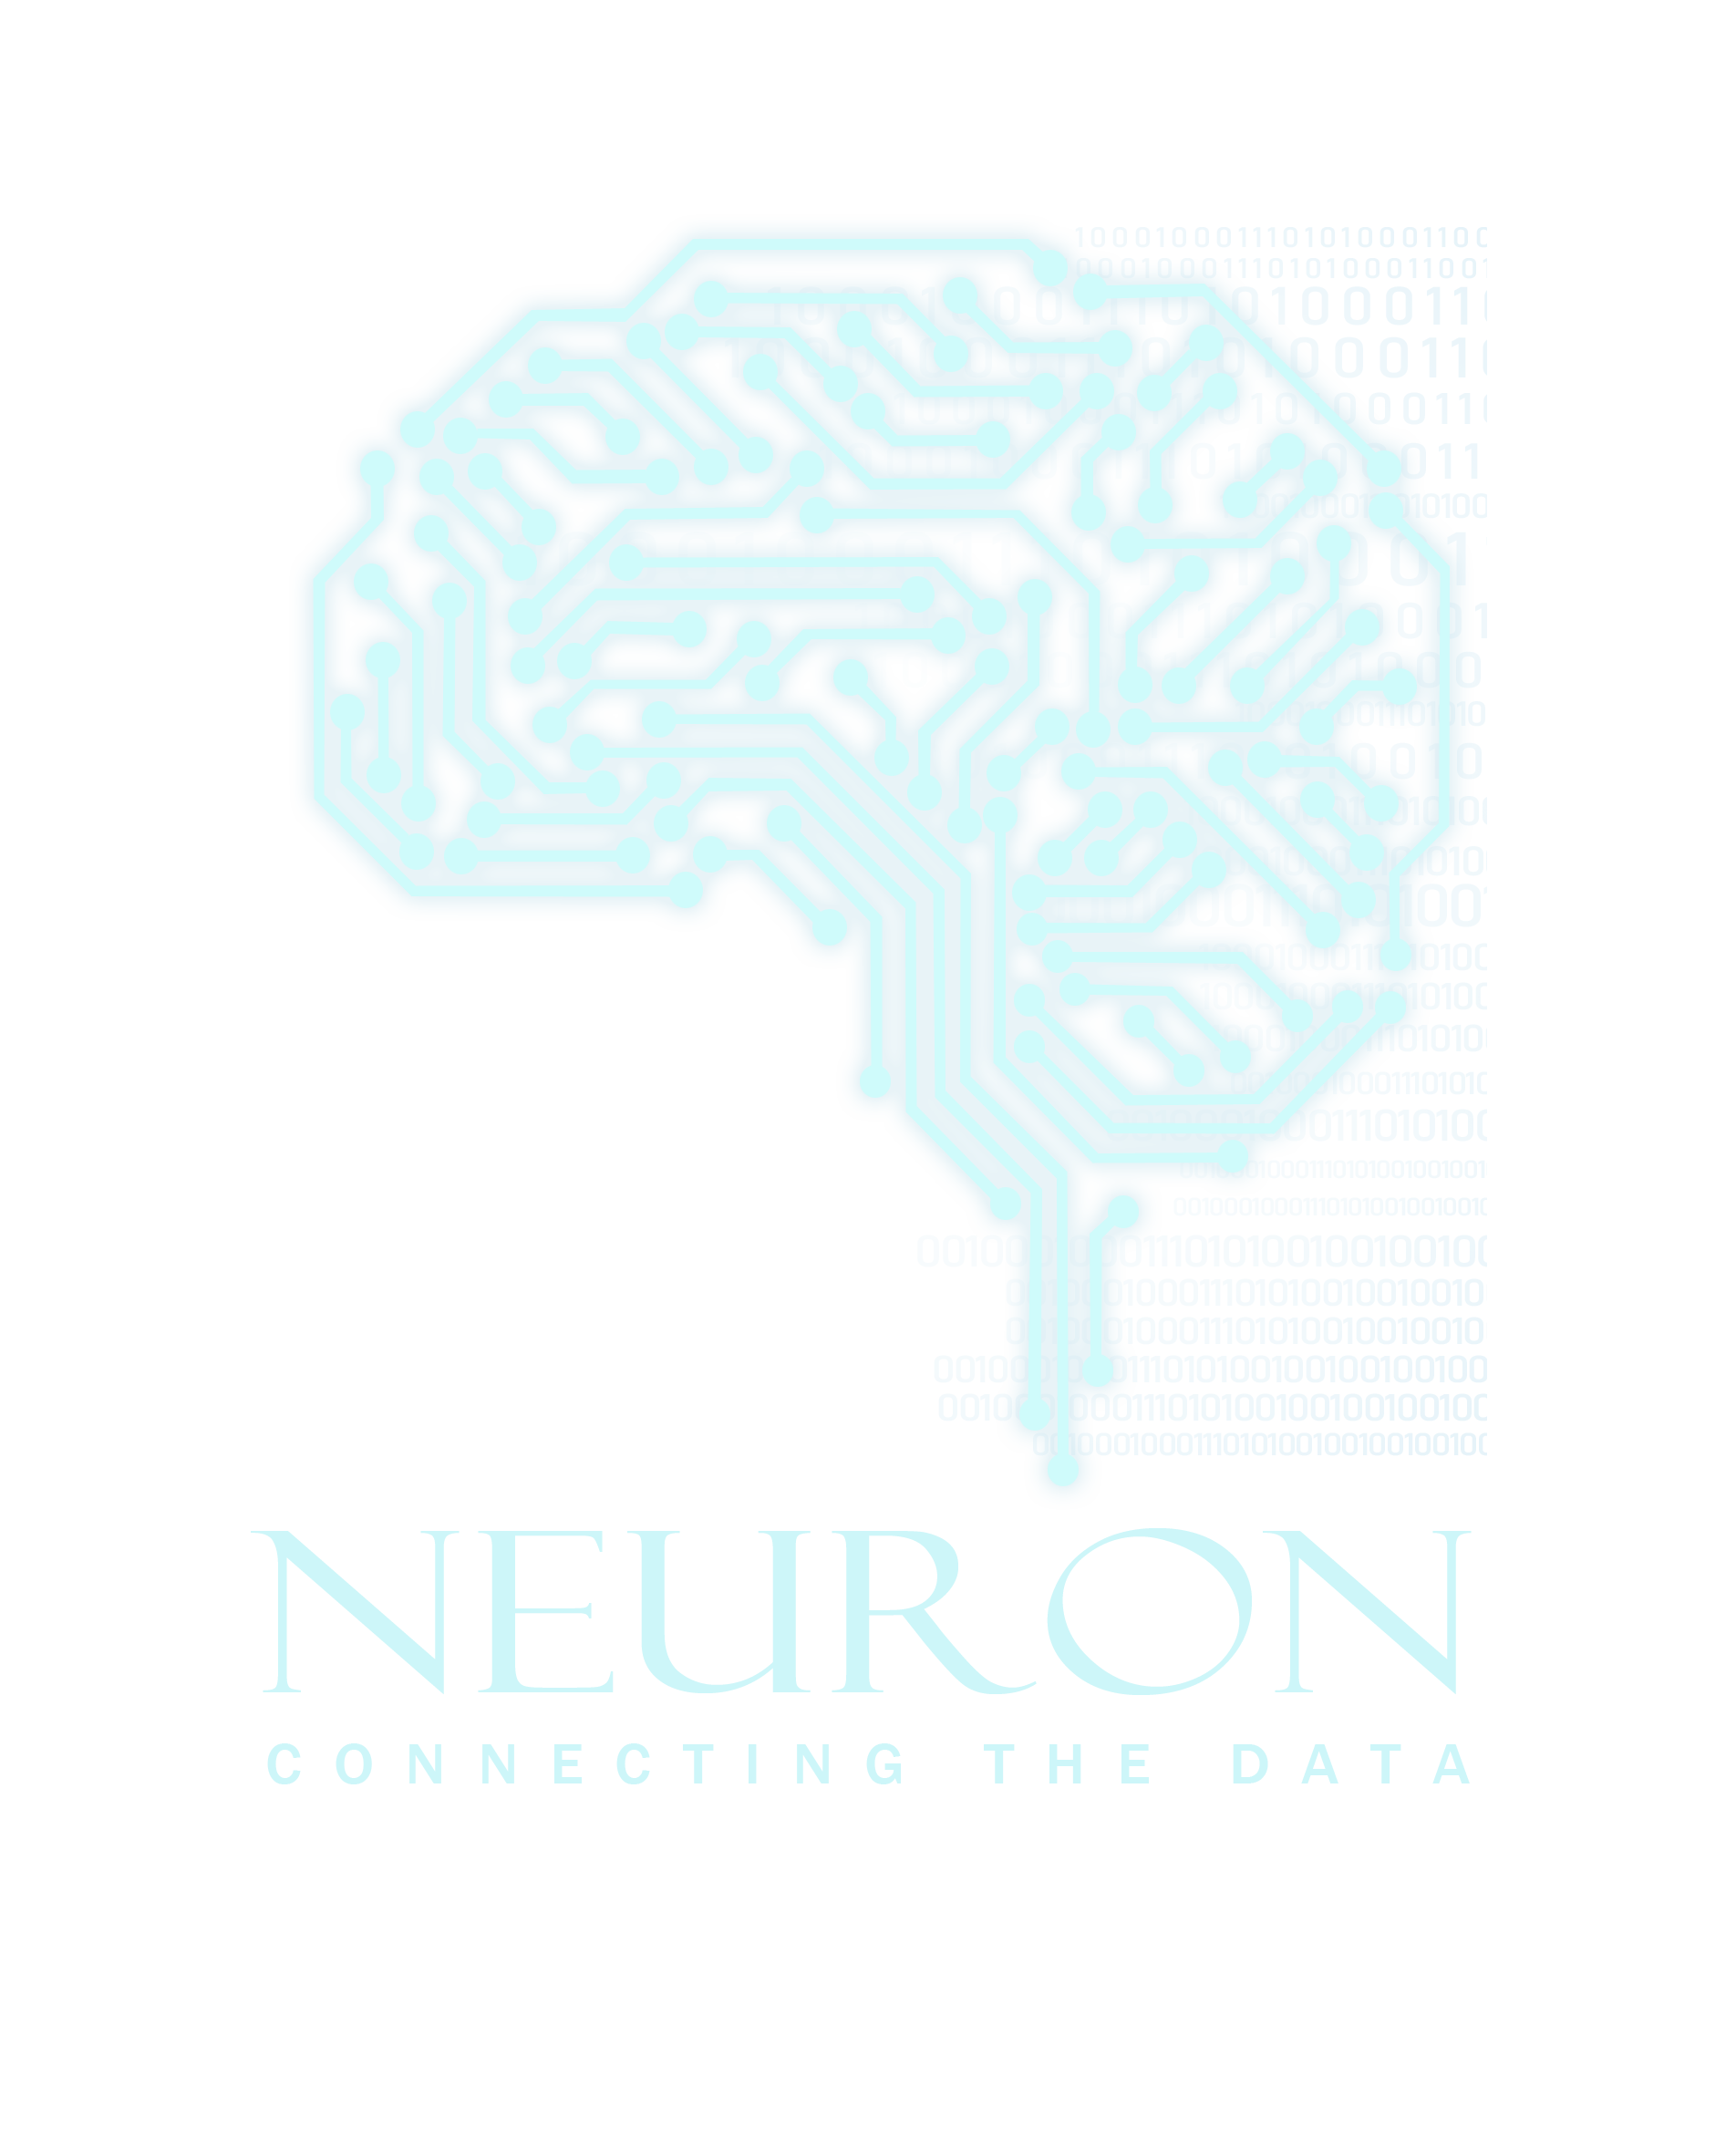 Neuron - Connecting The Data - Logo